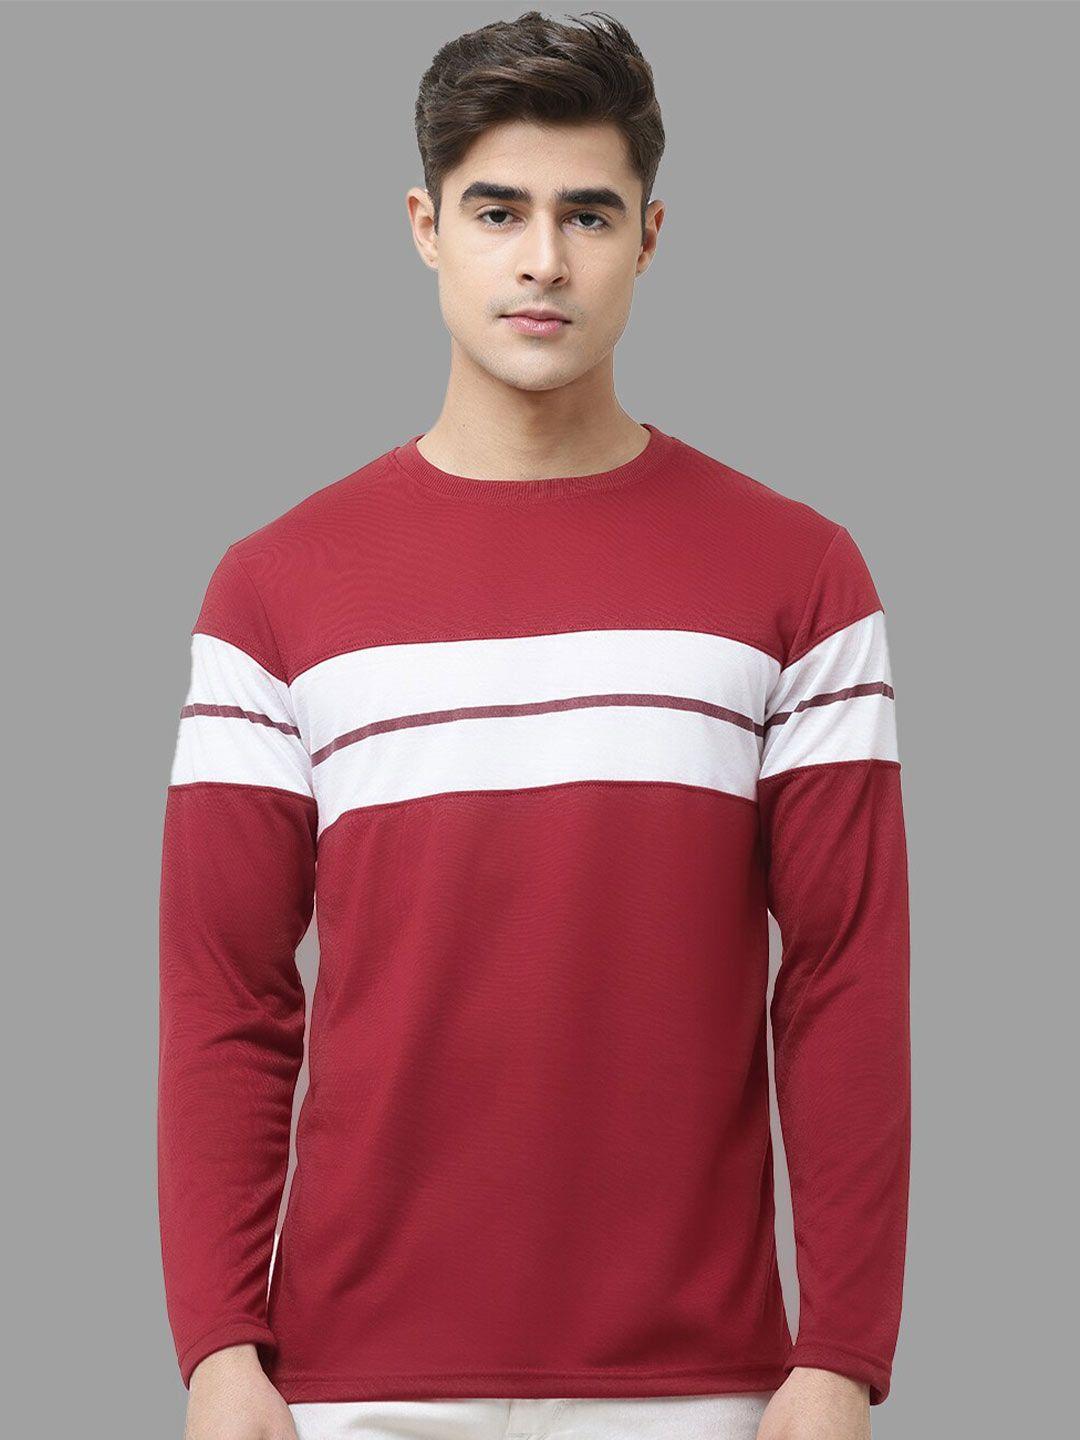 leotude men maroon striped v-neck pockets t-shirt